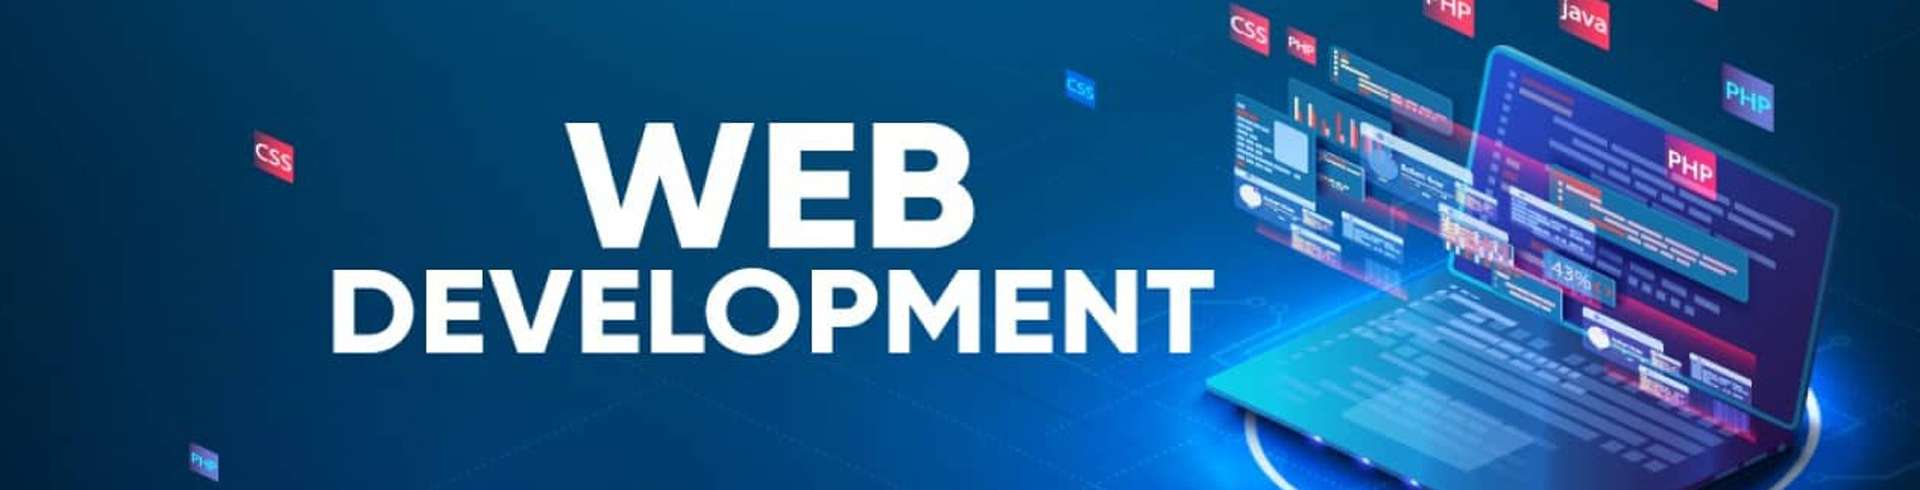 Web-Development_imedia3.com